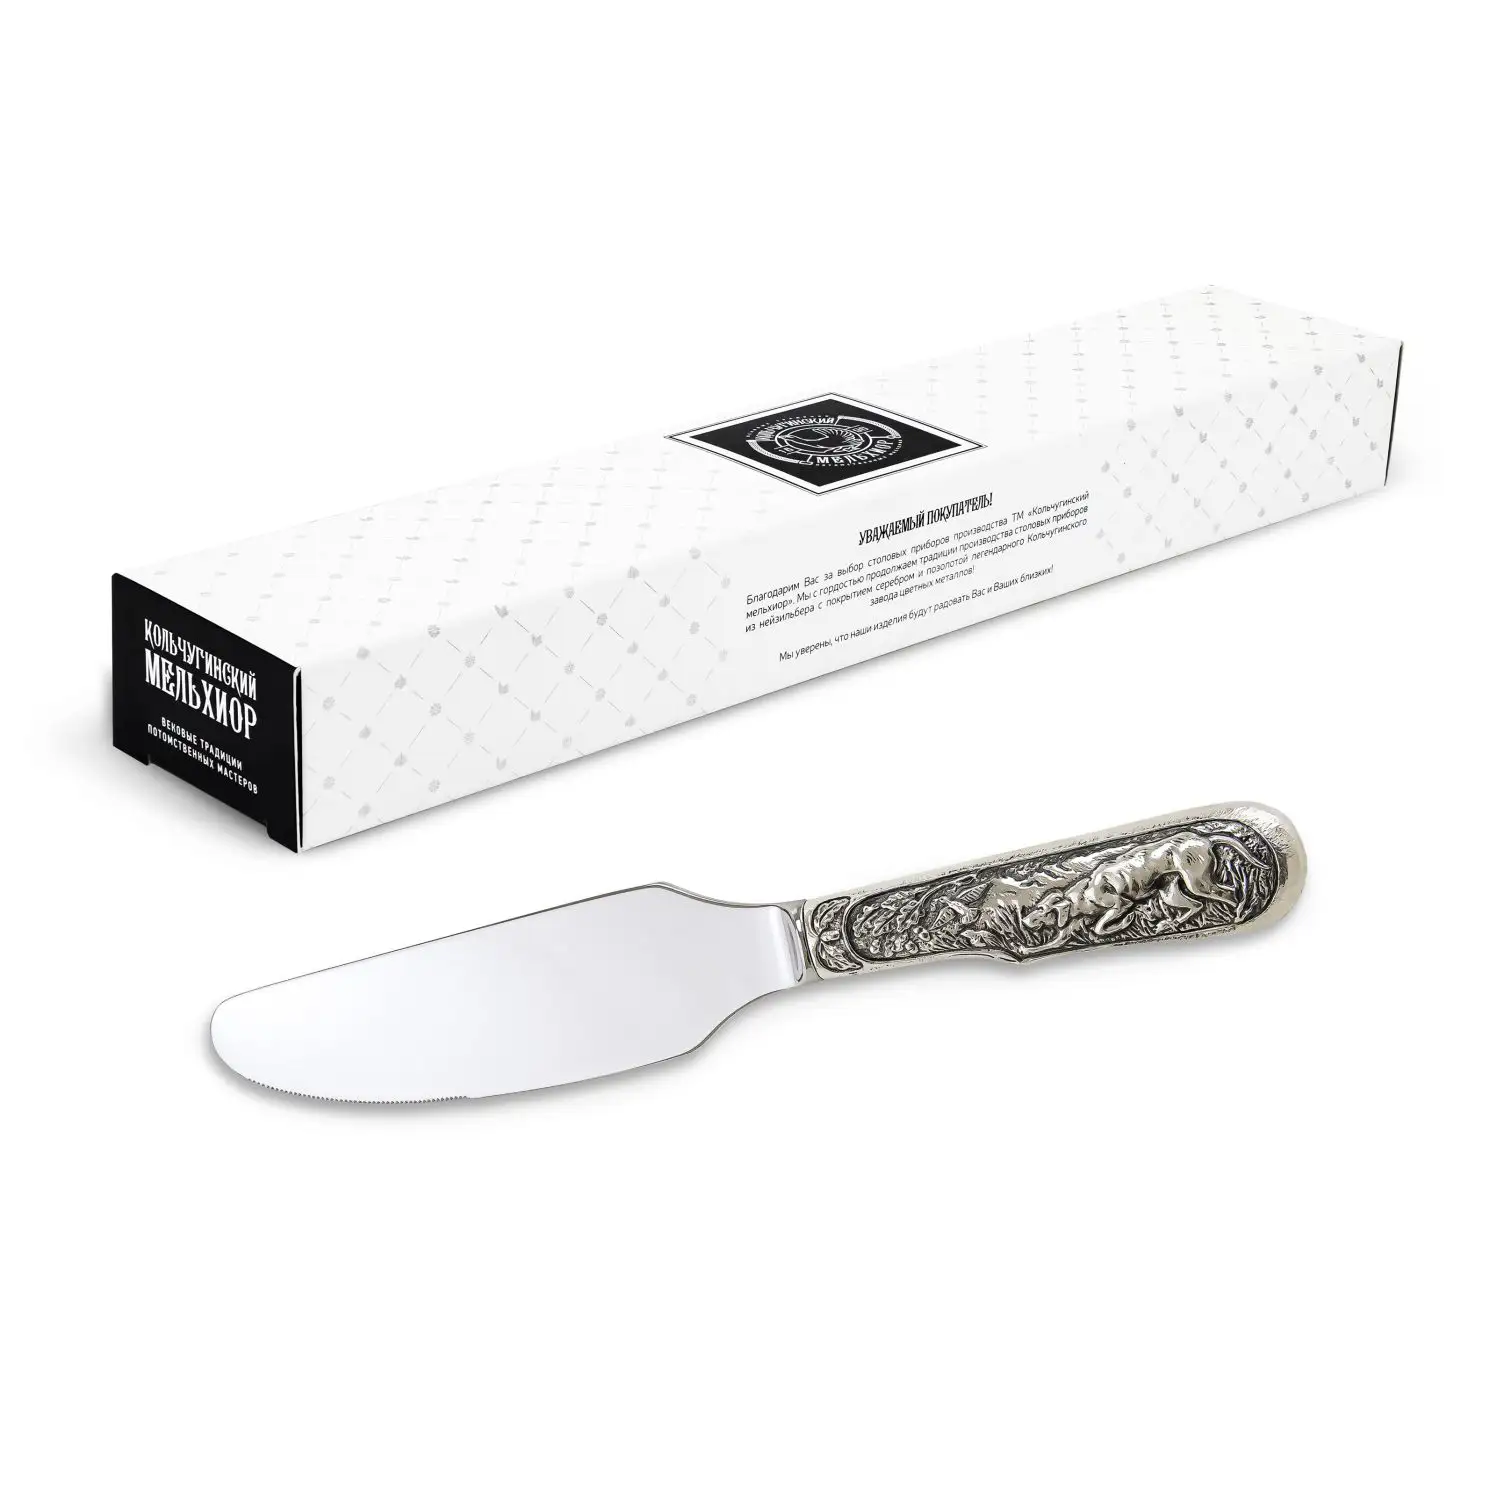 нож д мяса пойнтер l 220 3930 посереб полир с черн Нож для торта Пойнтер посеребренный с чернением